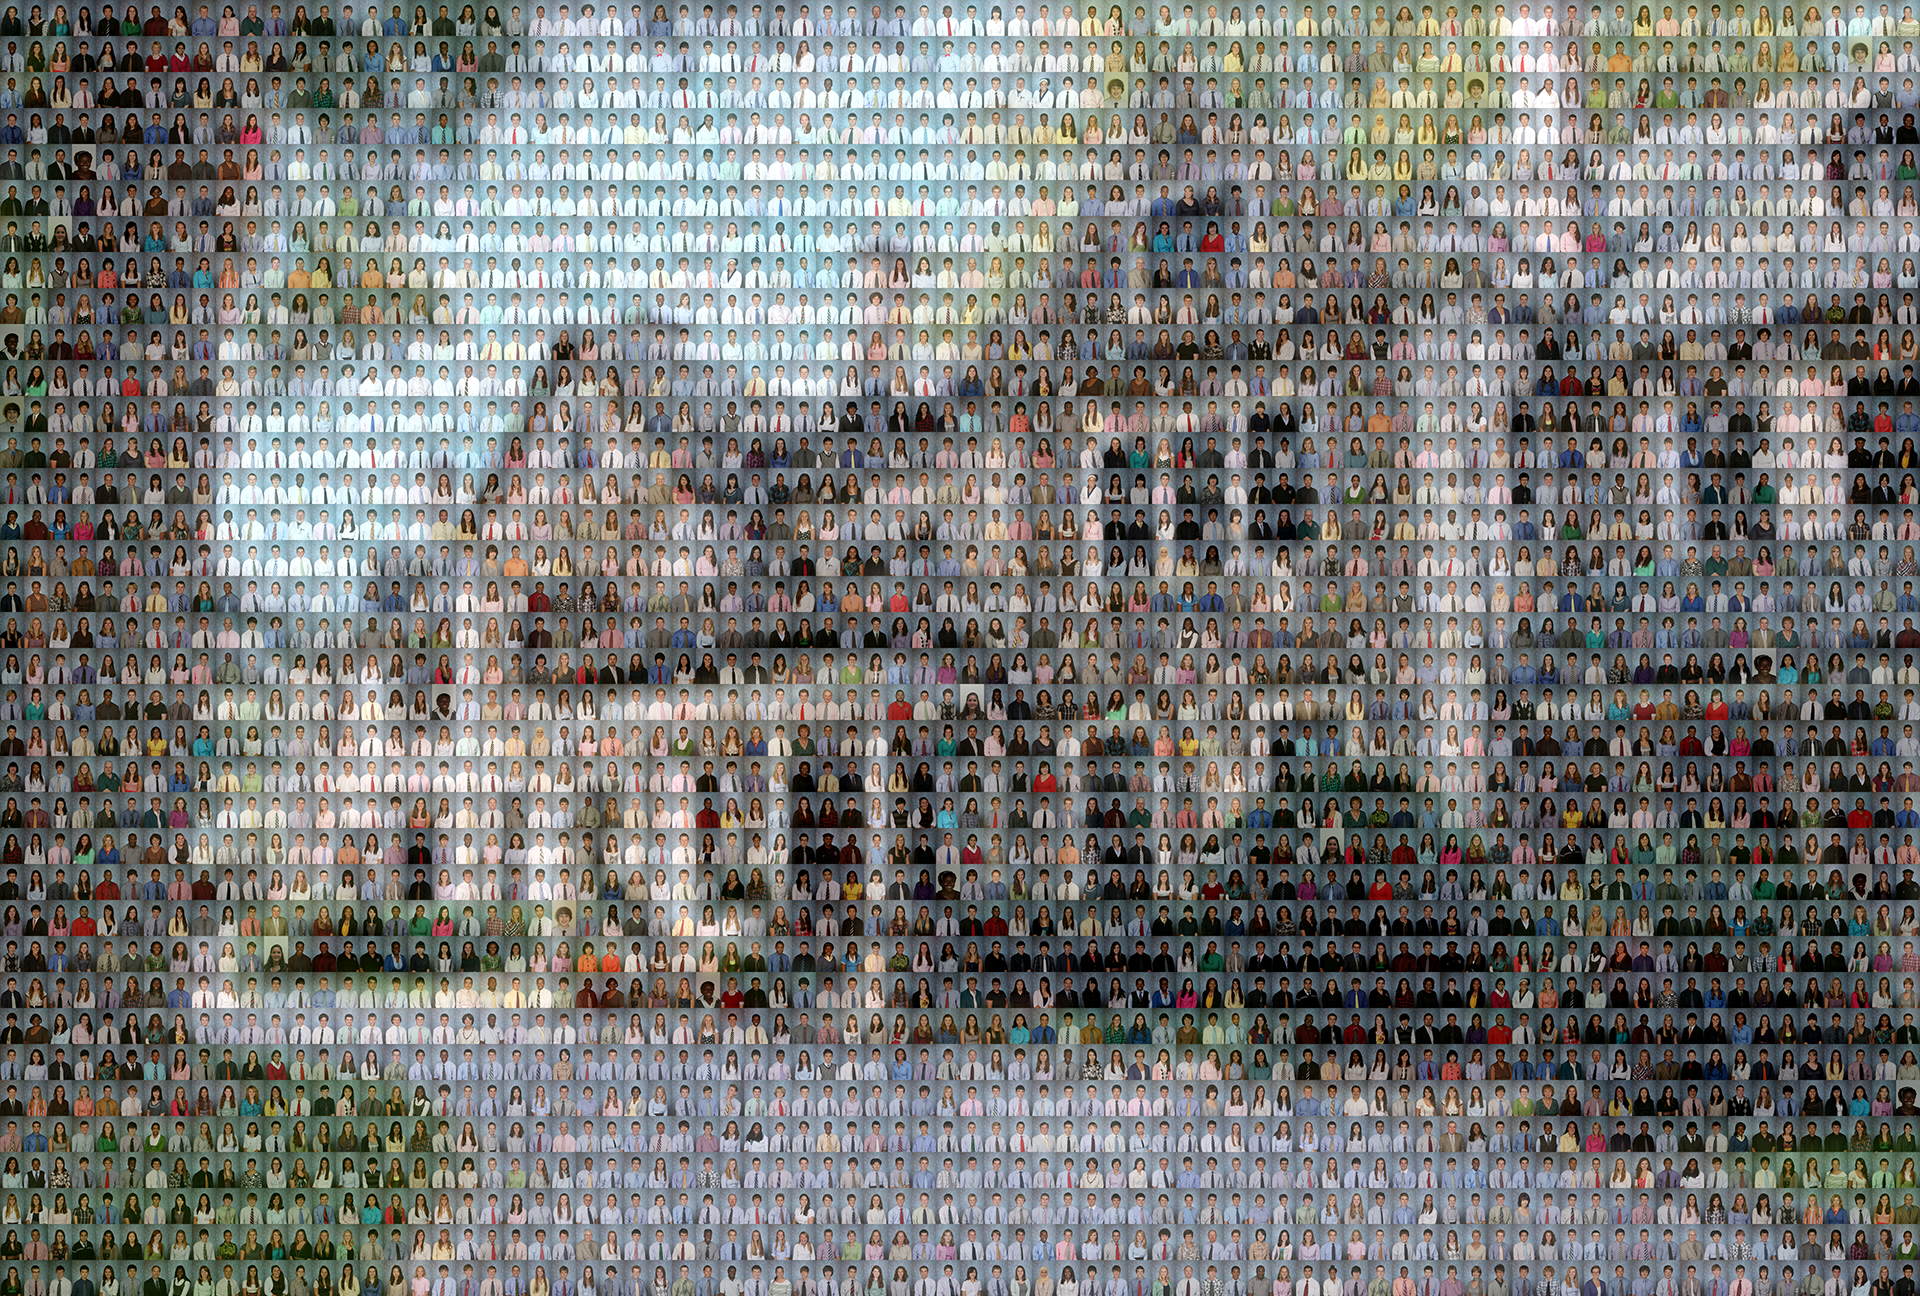 photo mosaic created using 679 school photos